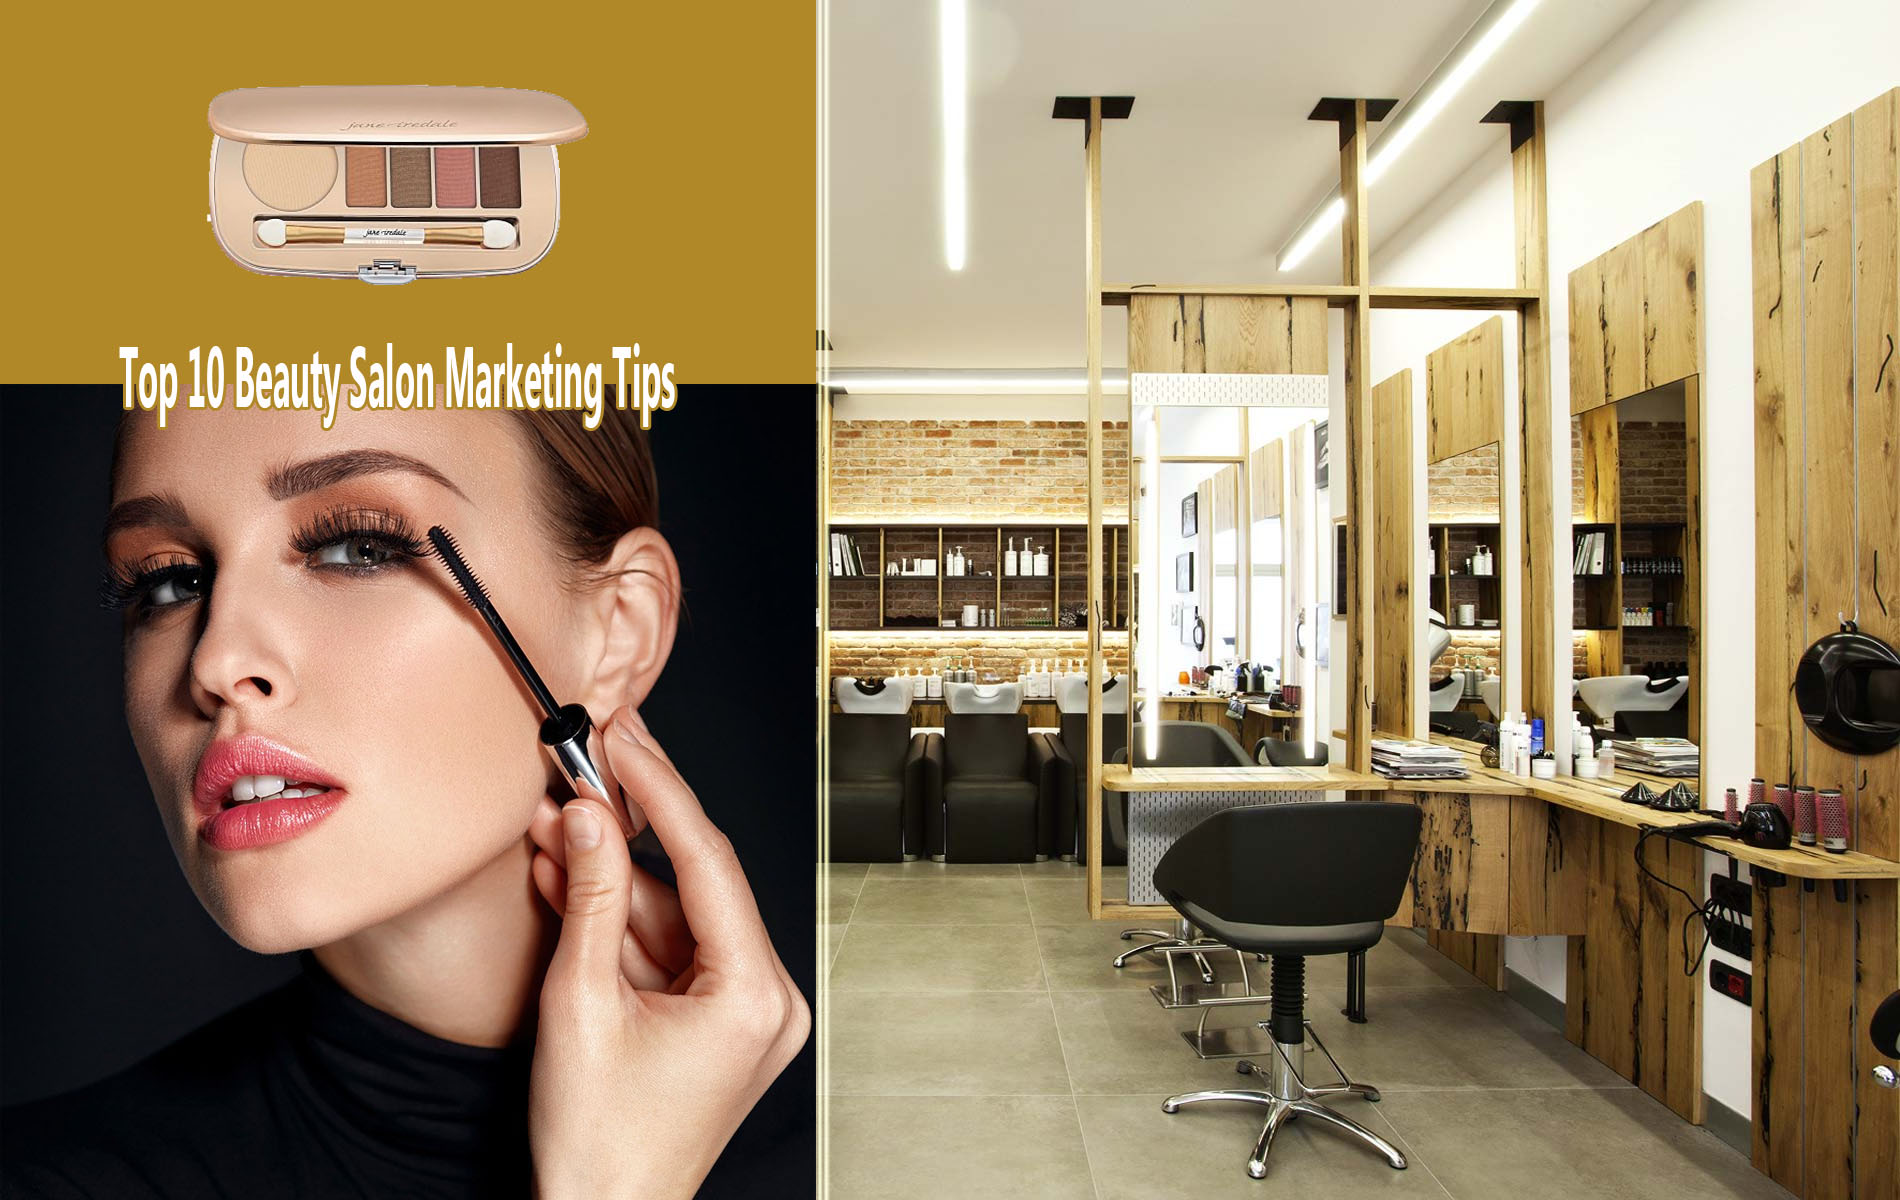 Top 10 Beauty Salon Marketing Tips